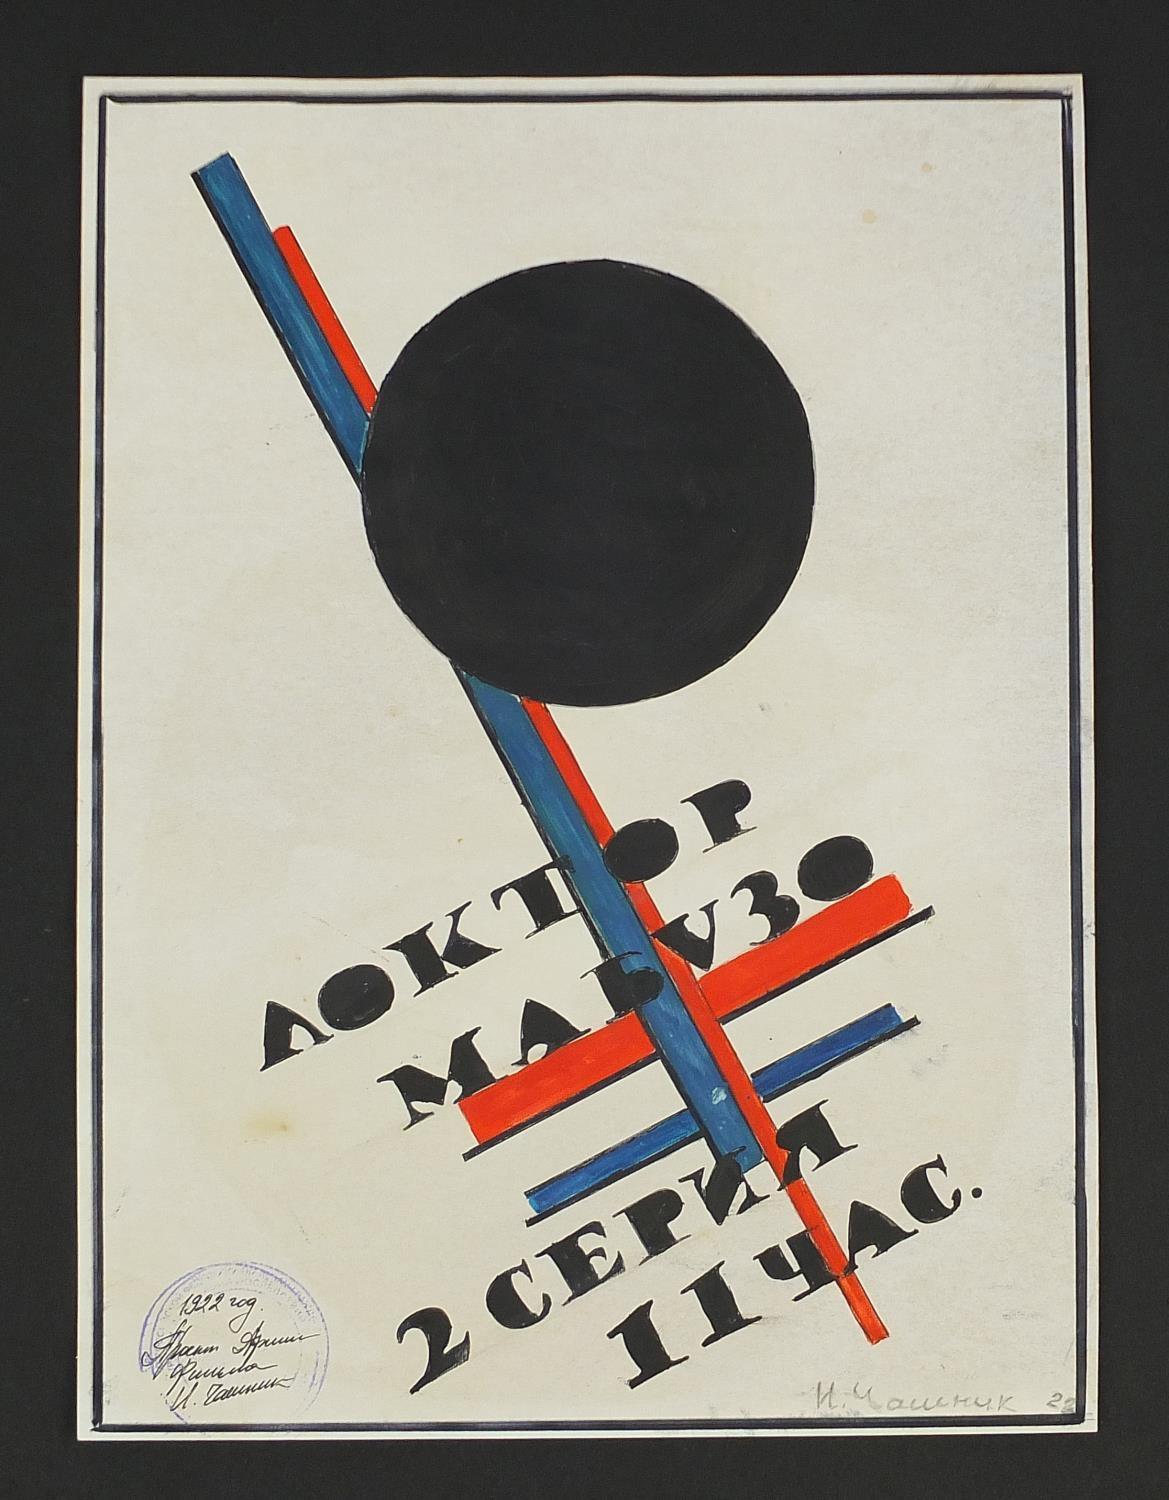 Ilya Grigorevich Chashnik 1922 - Doctor Mabuse film poster design, Russian propaganda Soviet State